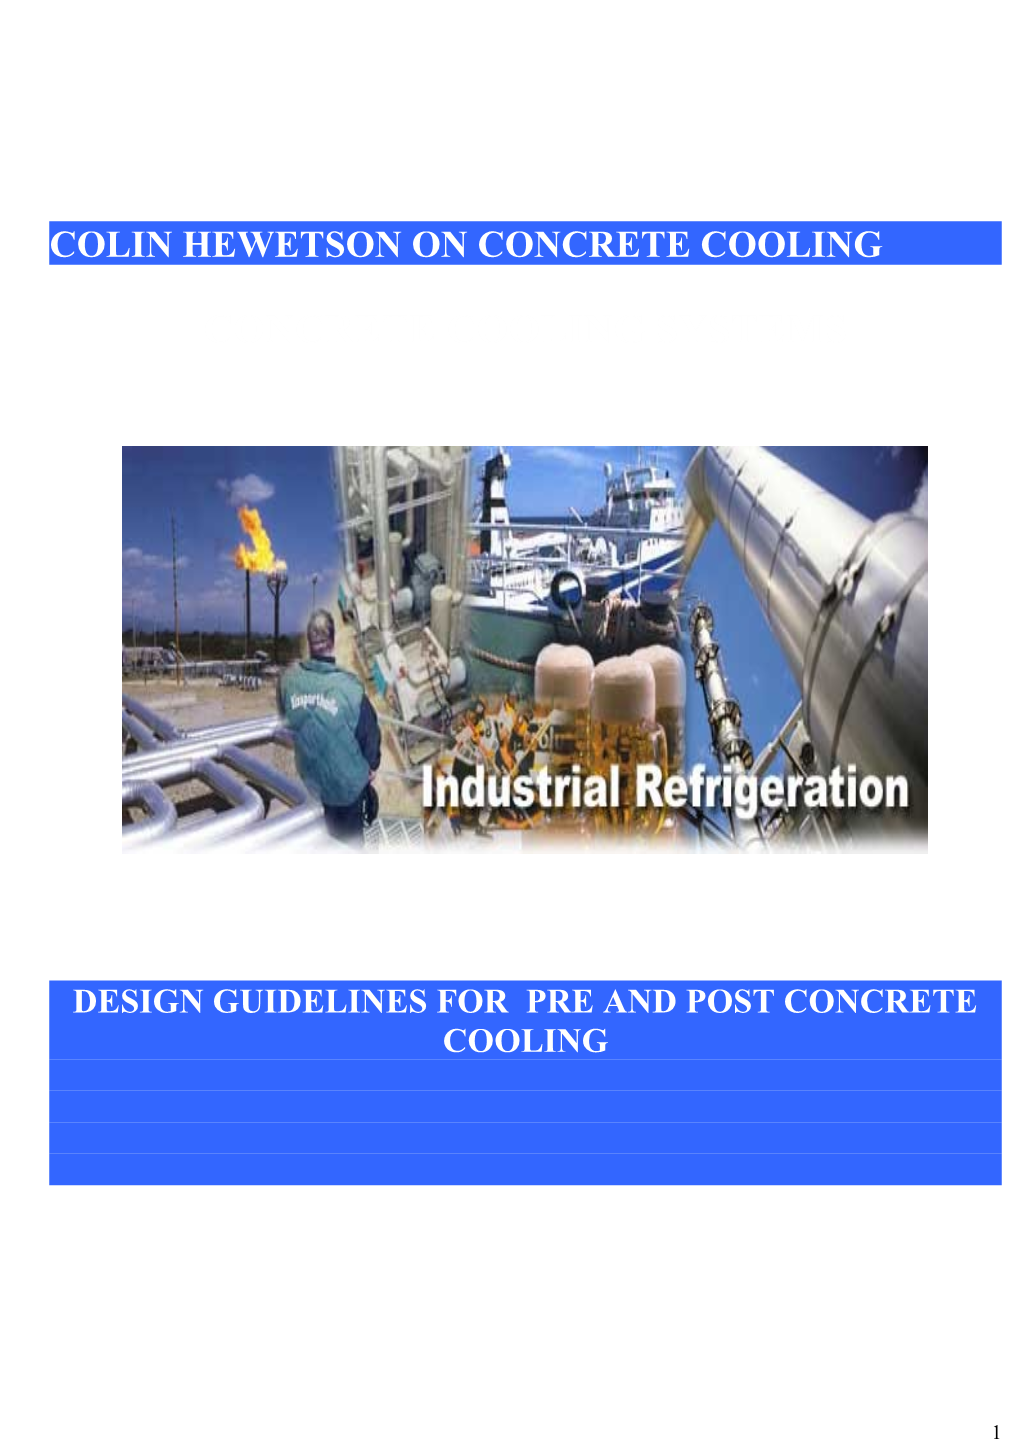 Concrete Cooling Applications